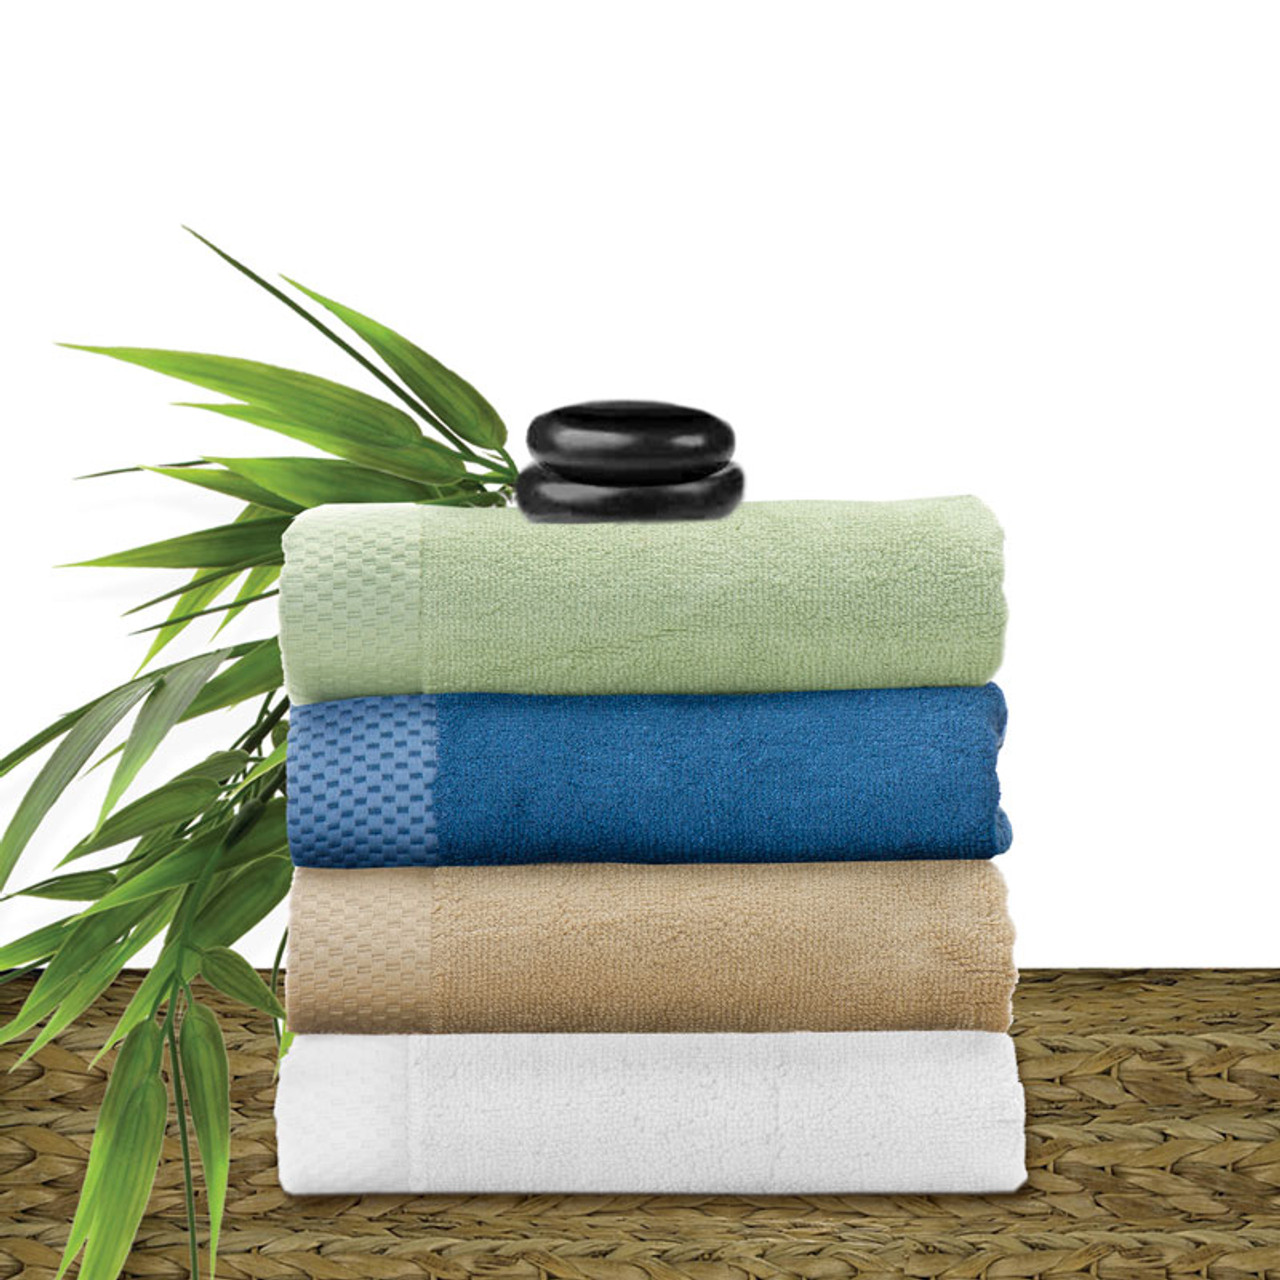 Bamboo Duck Egg Blue Luxury Hand/Bath/Sheet/Hair Towel